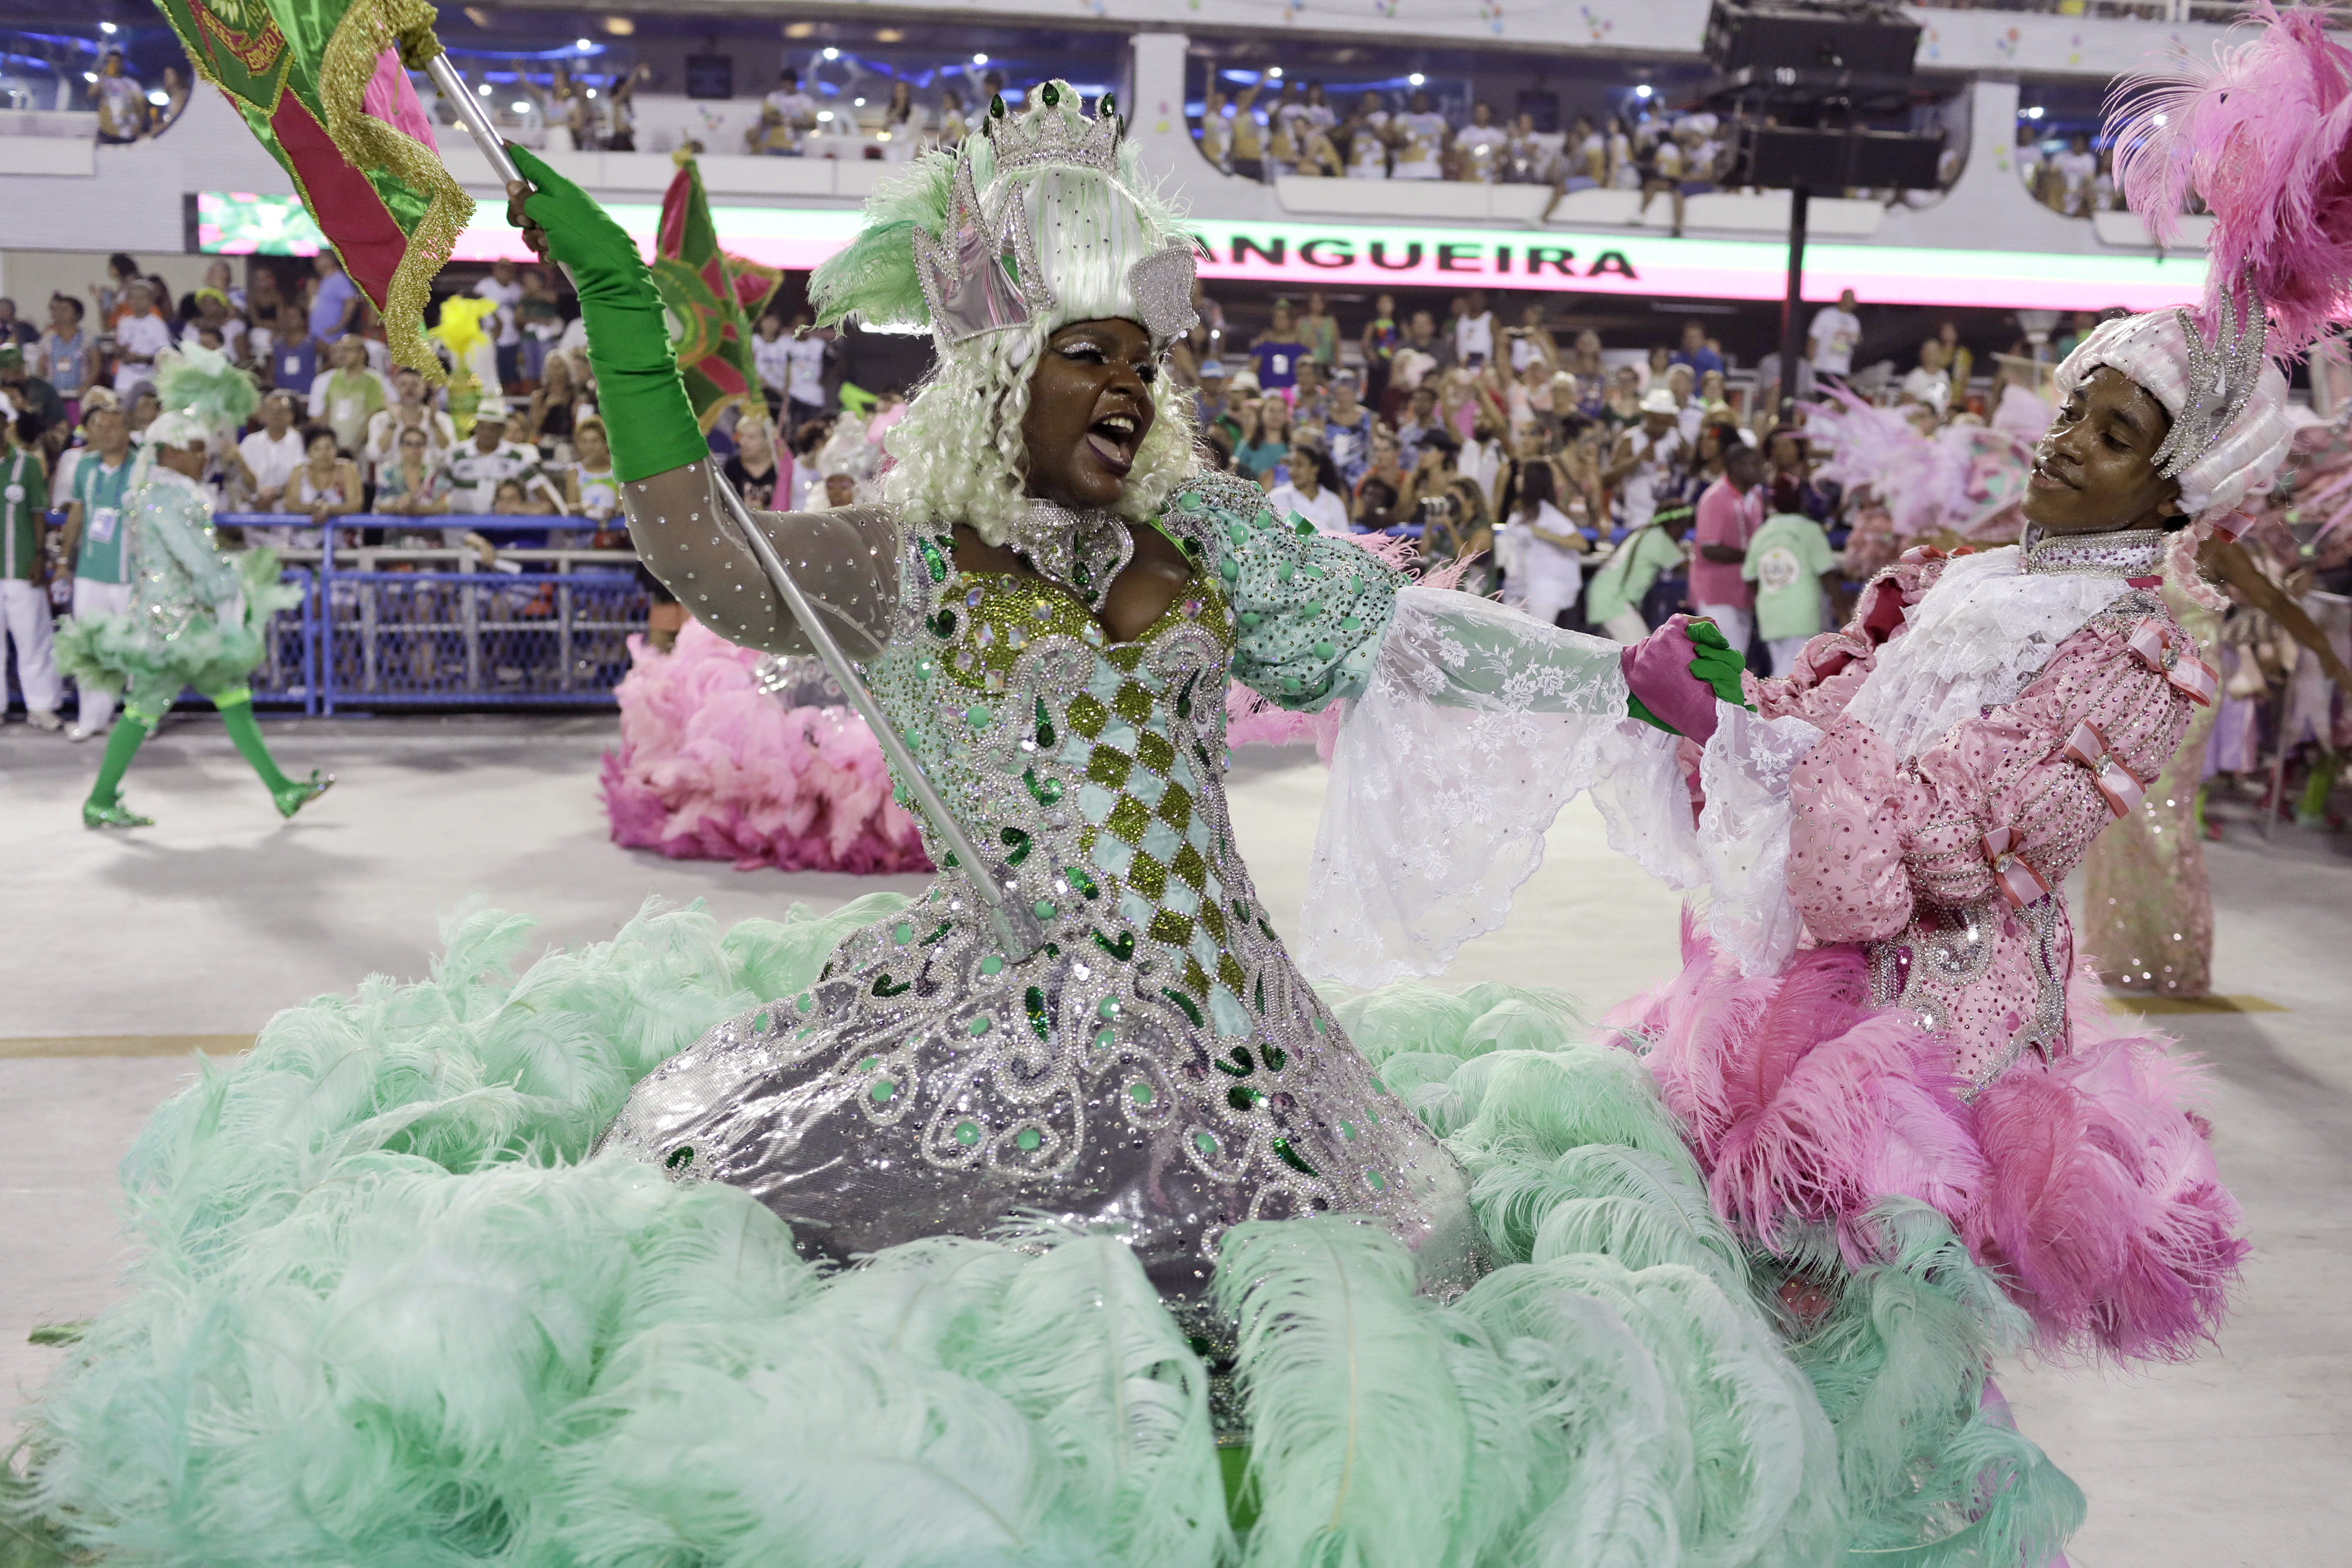 Performers from Mangueira samba school parade during Carnival celebrations at the Sambadrome in Rio de Janeiro, Brazil, Monday, Feb. 12, 2018. (AP Photo/Leo Correa)